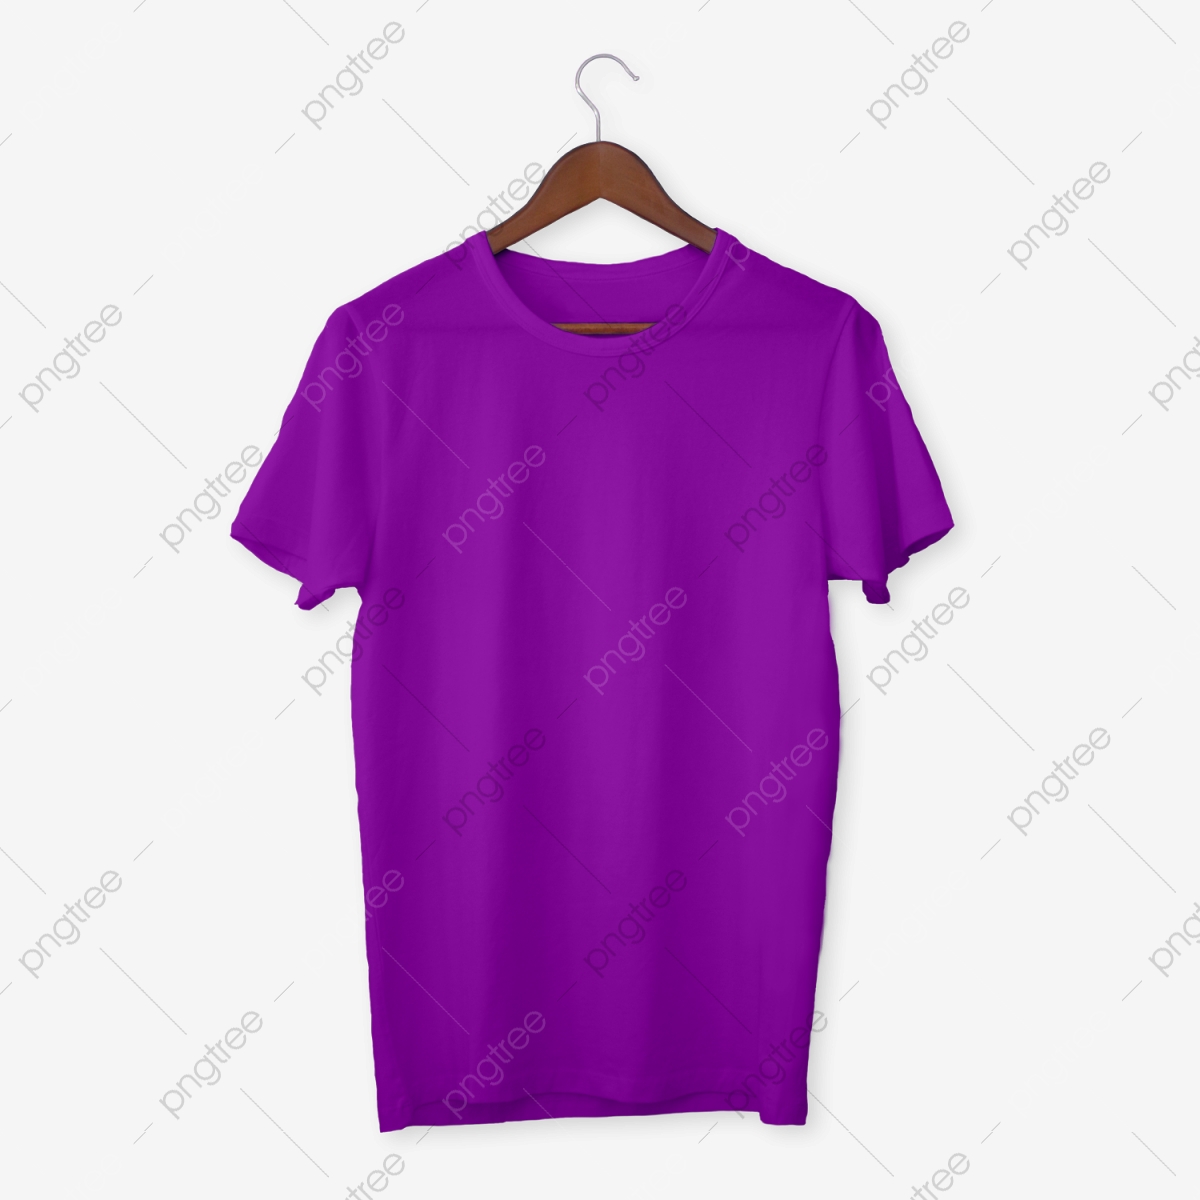 Shirt clipart purple shirt. T mockup shirts mens